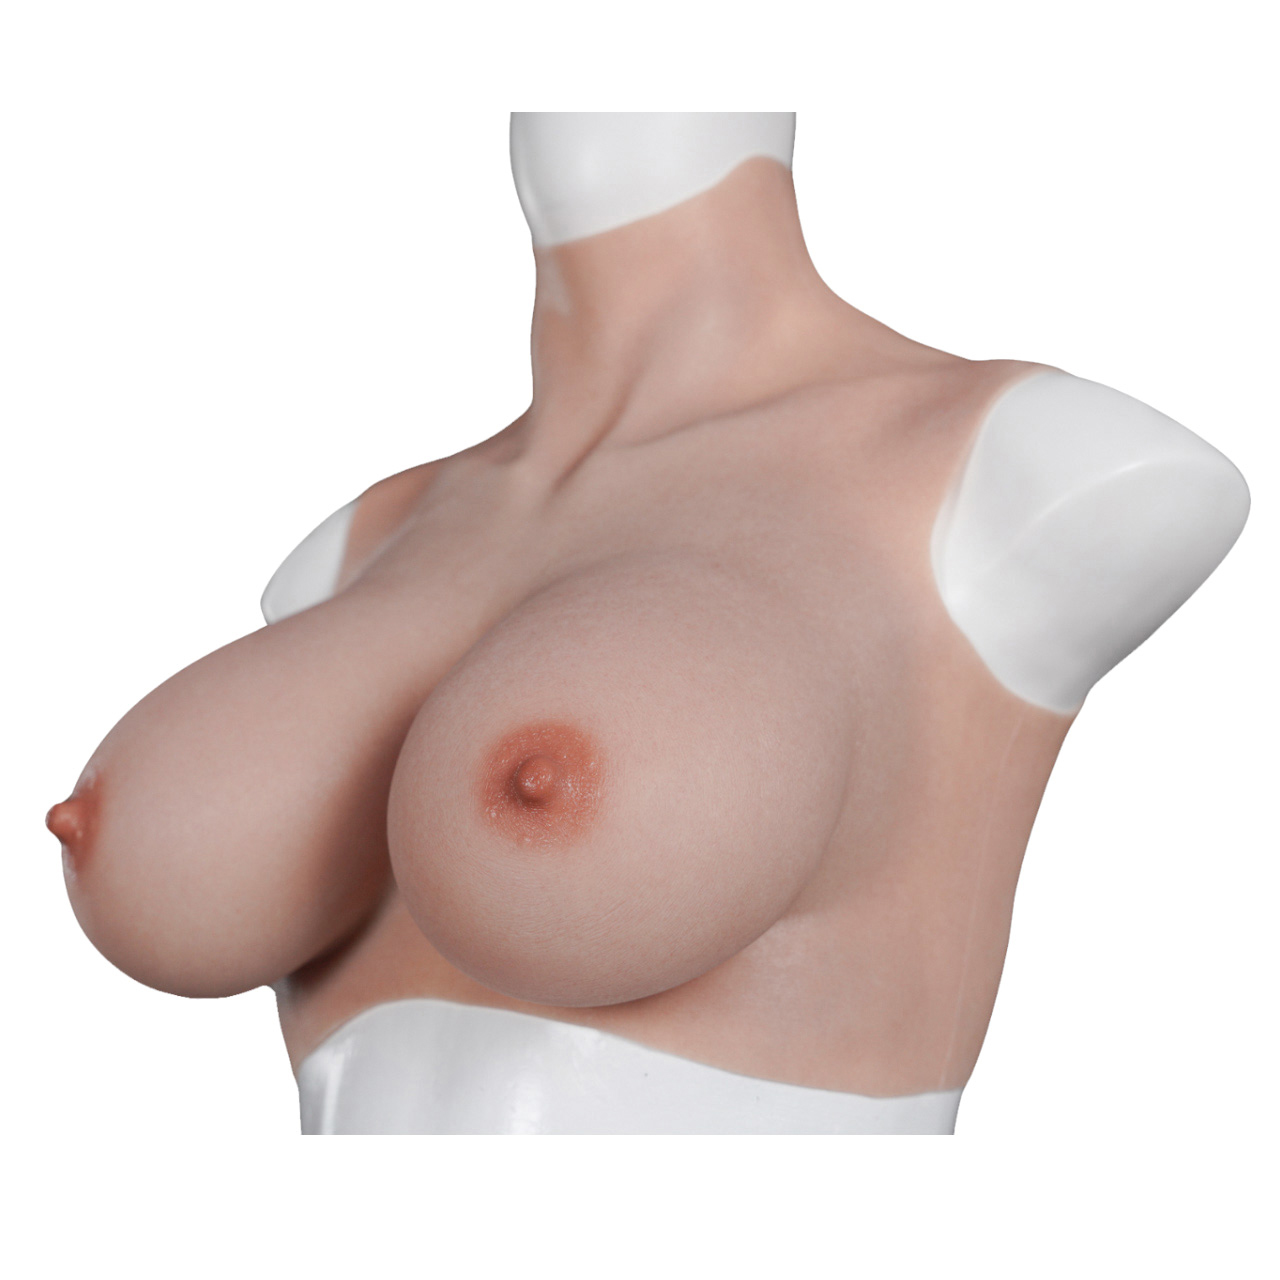 XX-DREAMSTOYS Ultra Realistic Breast Form Size L 